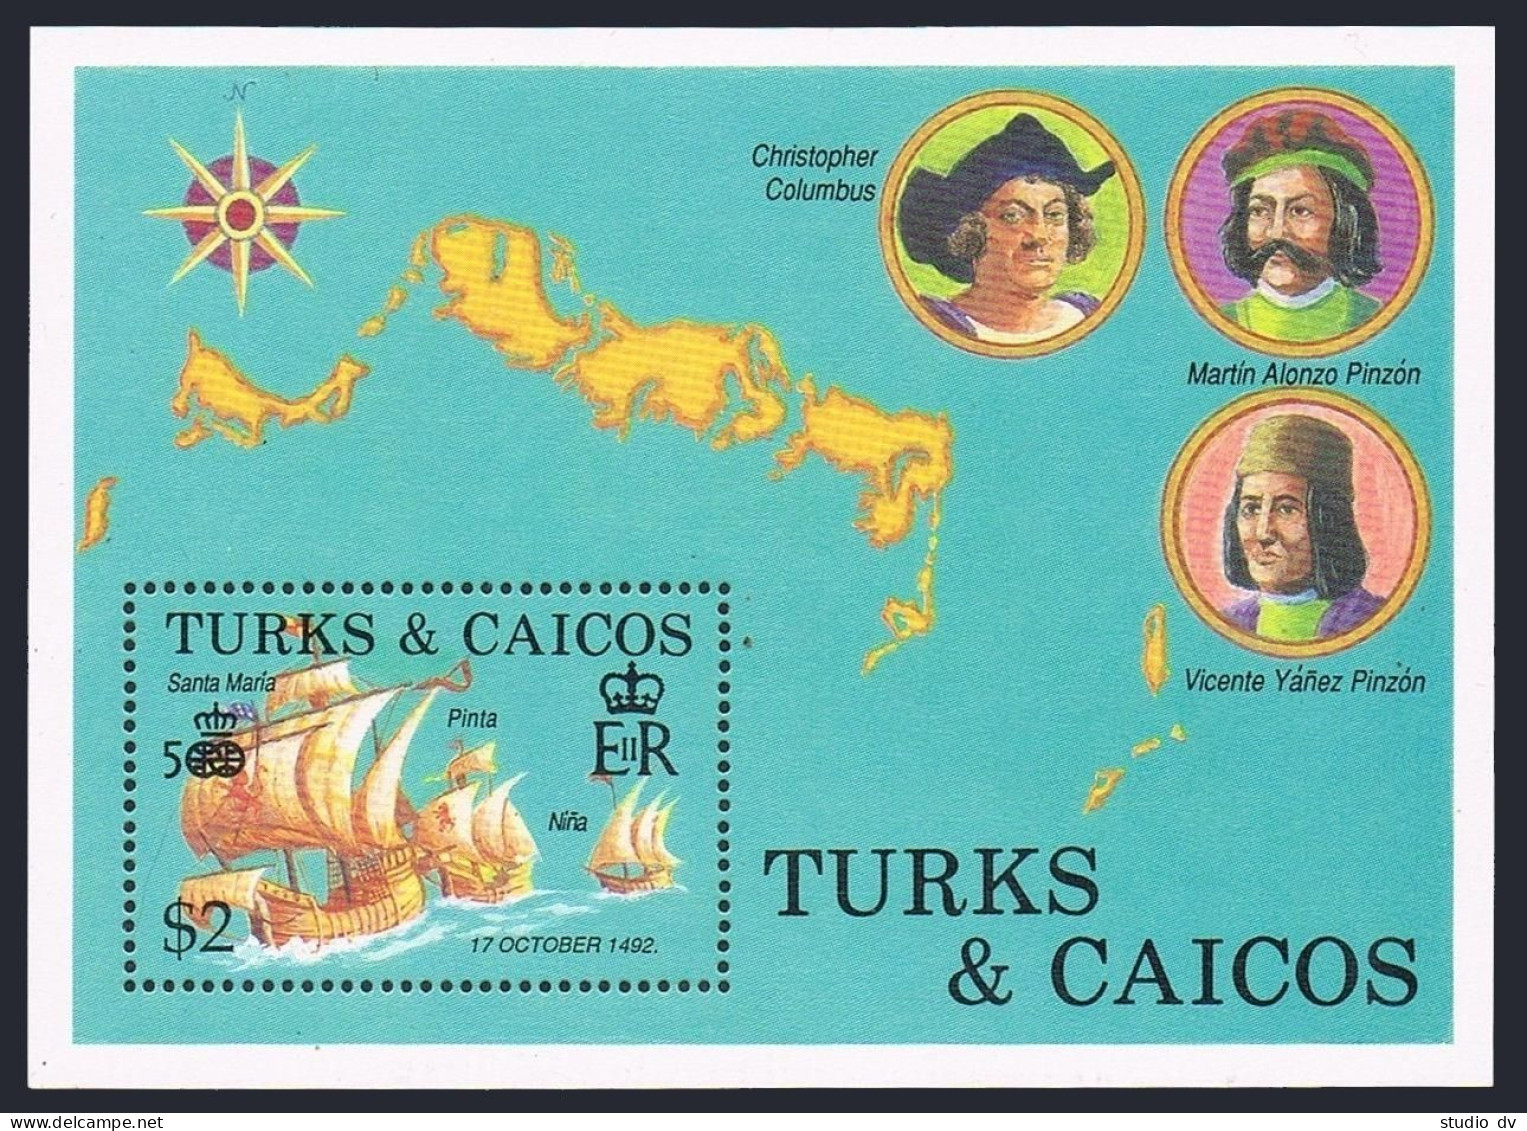 Turks & Caicos 738, MNH. Mi 805 Bl.70. Discovery Of America-500. Ships. 1992. - Turks & Caicos